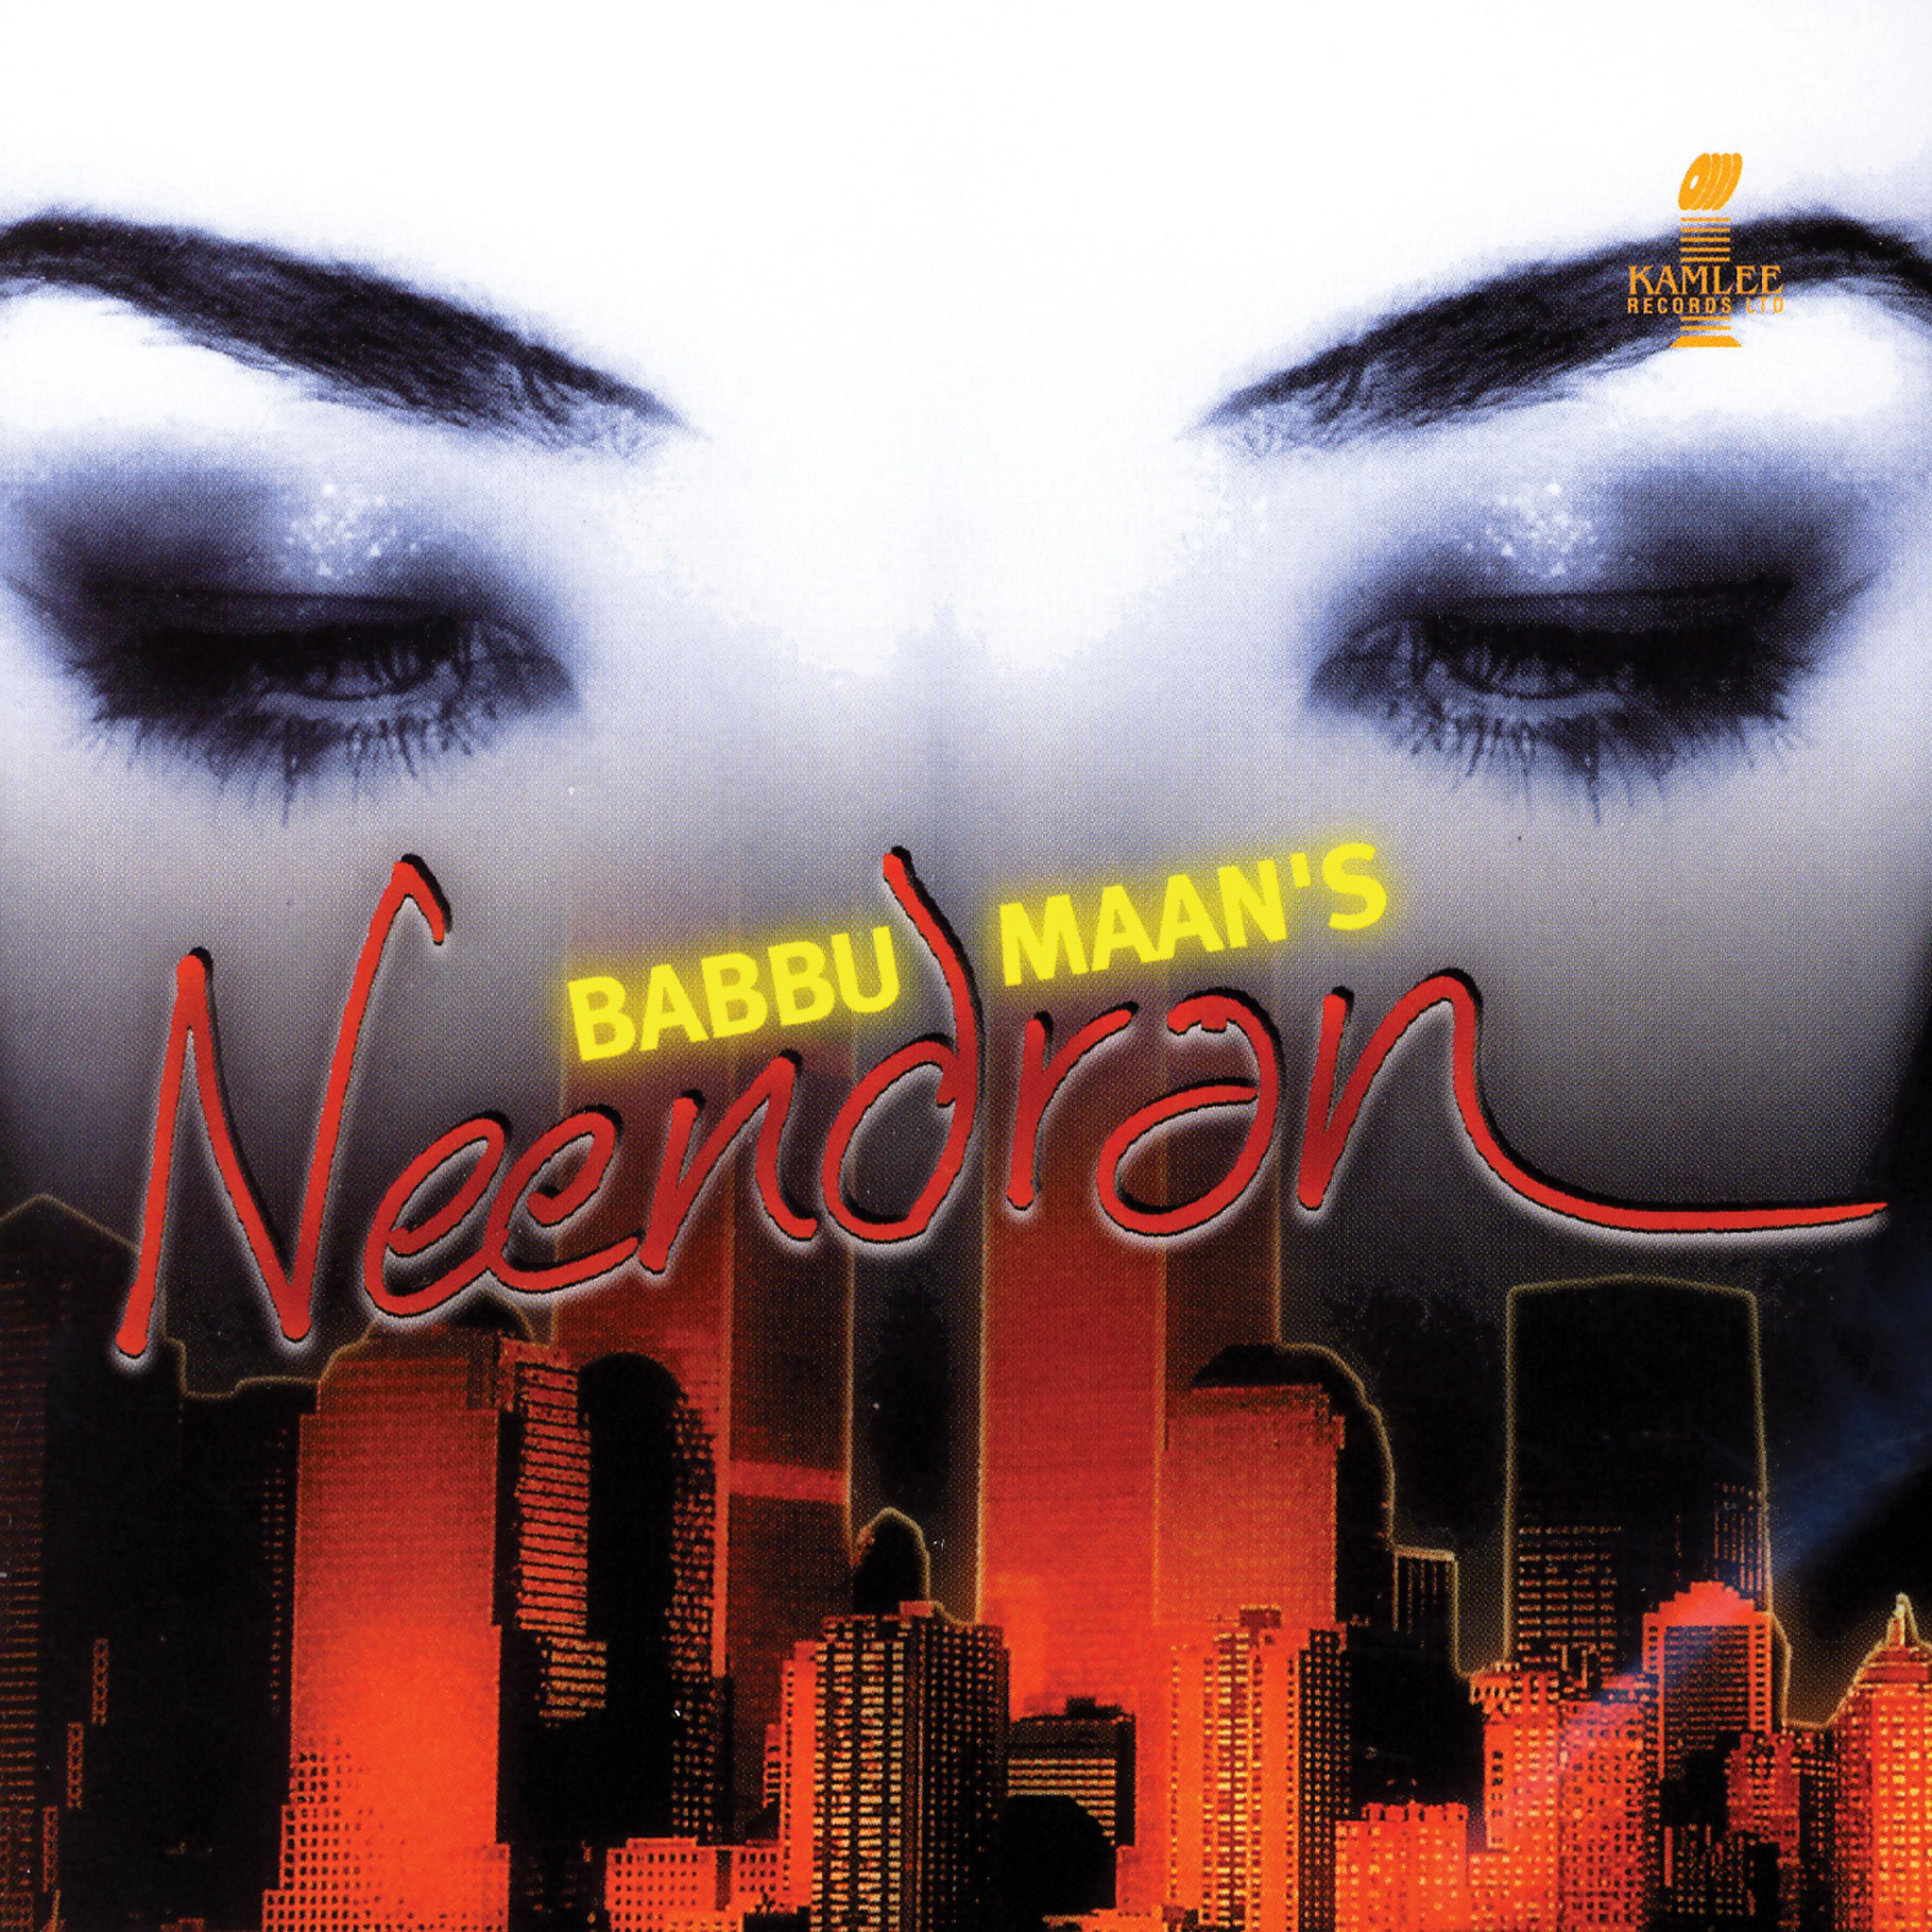 Постер альбома Neendran